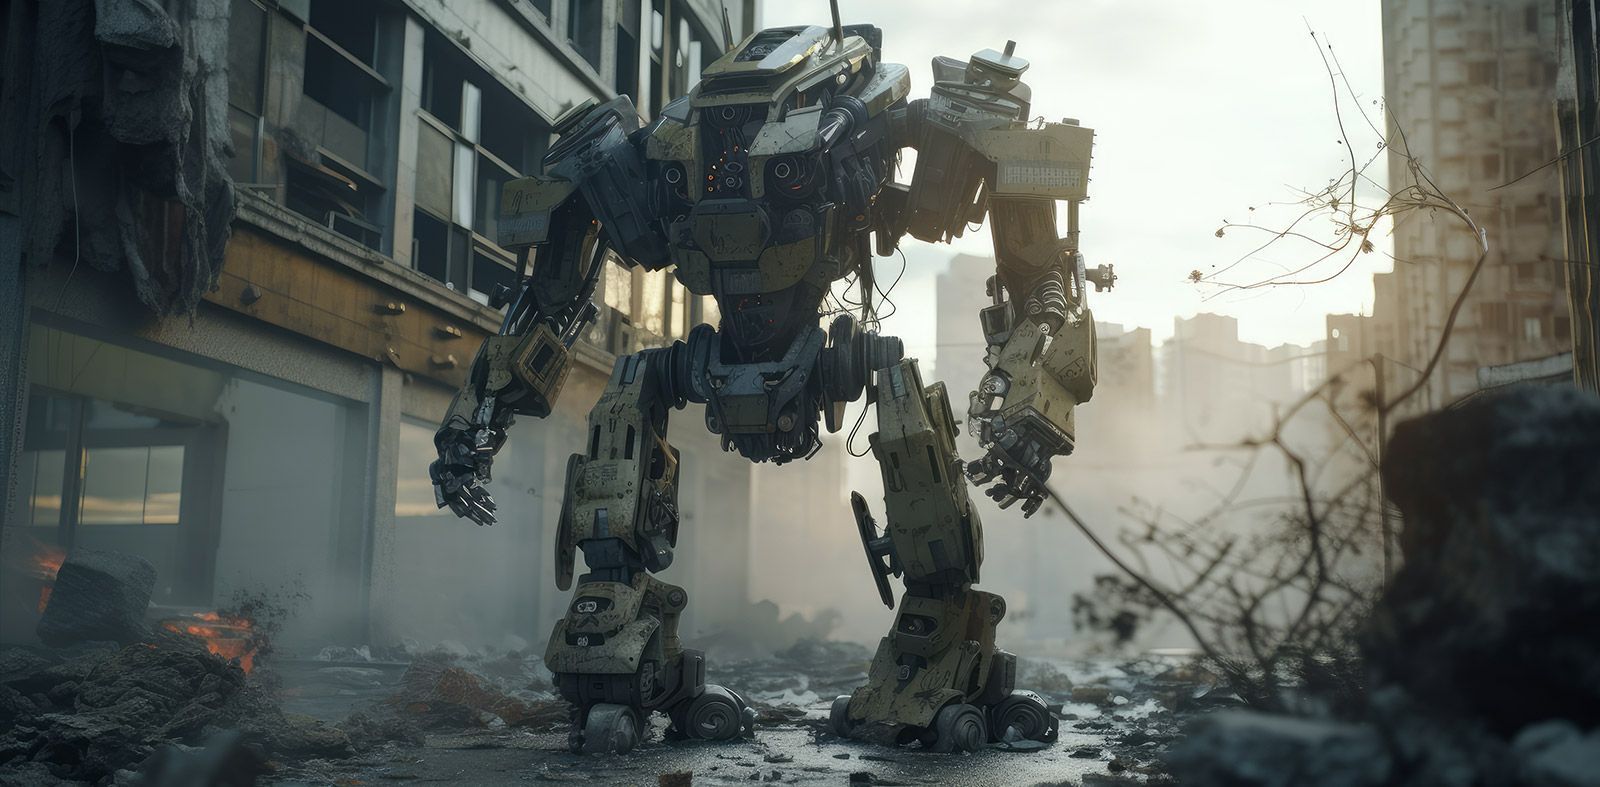 Immagine di un robot distruttore da guerra